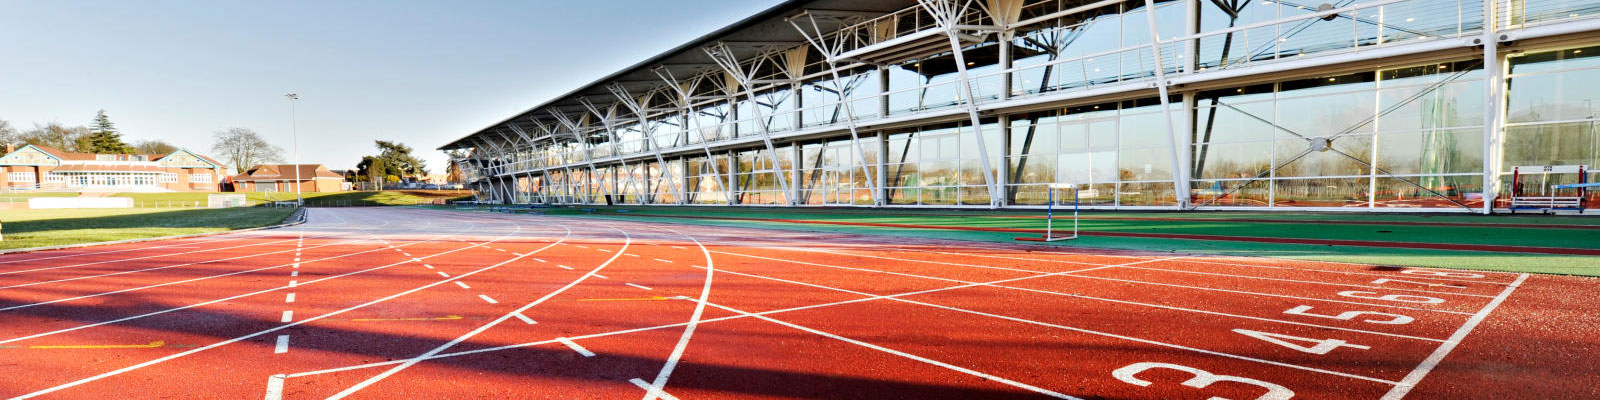 Athletics Centre at Loughborough University